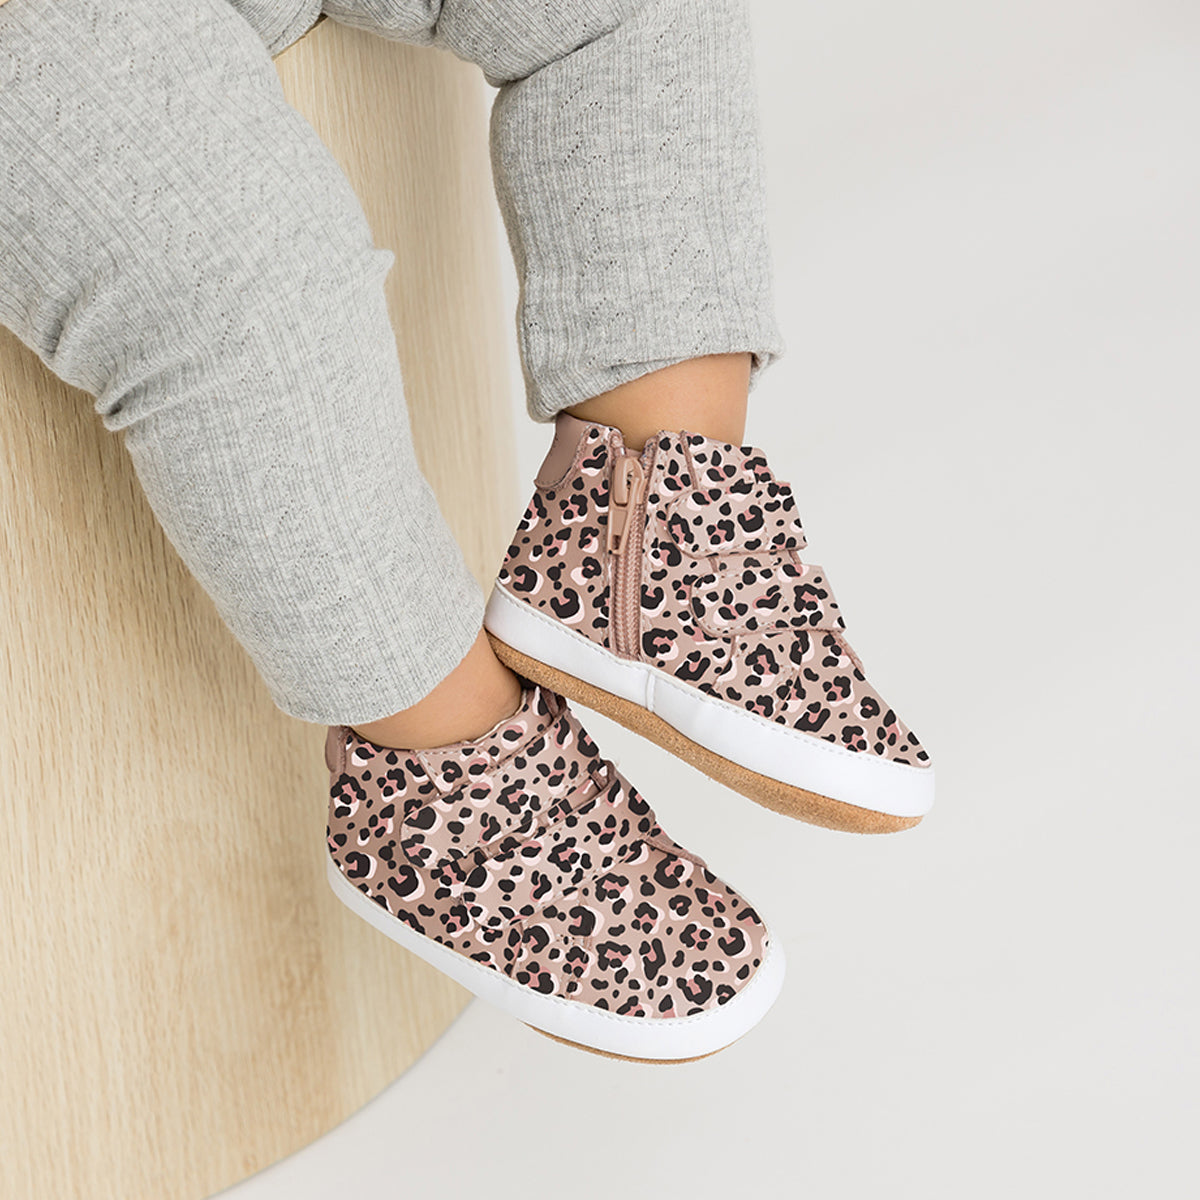 Toddler wearing Hi Top shoe in leopard print